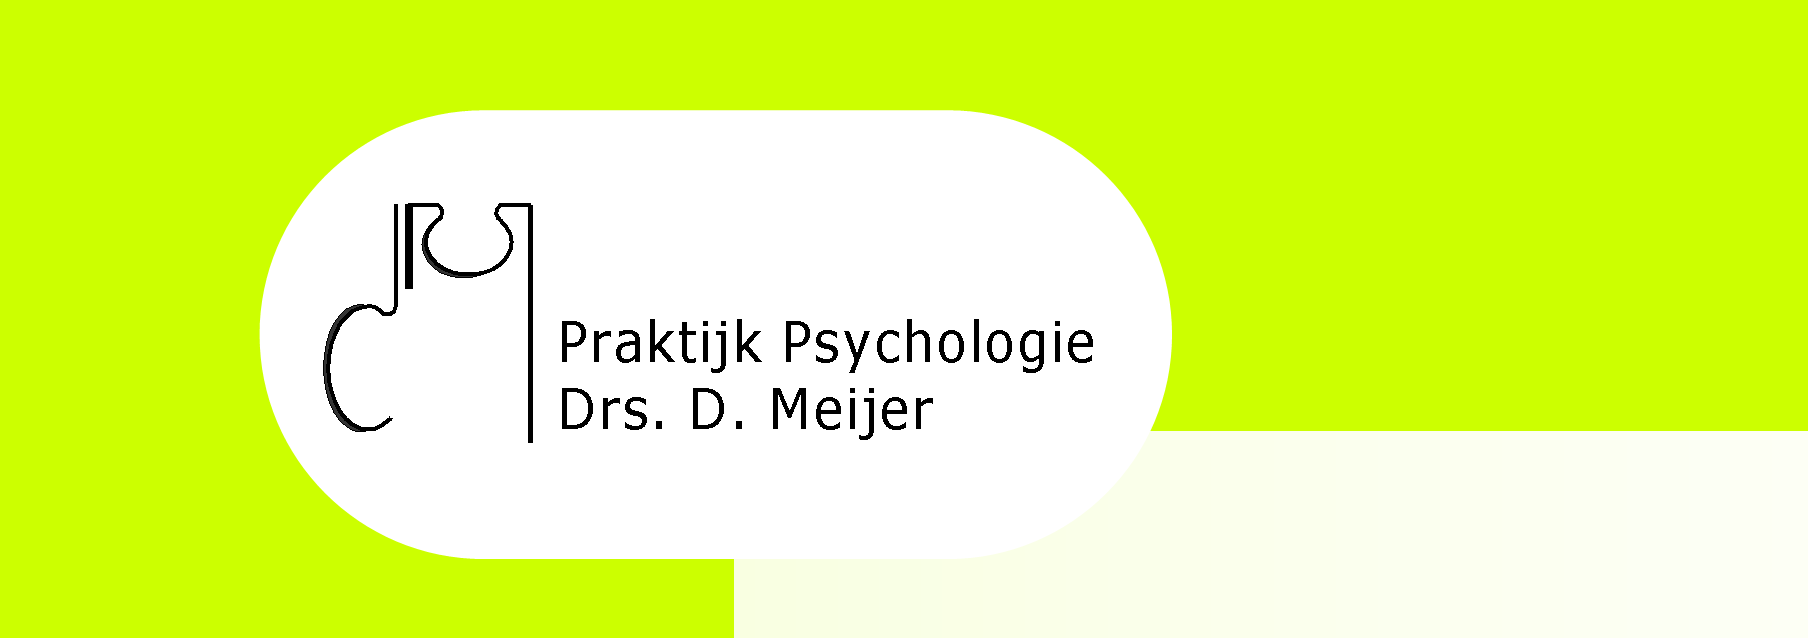 praktijkpsychologie logo kleur 300dpi